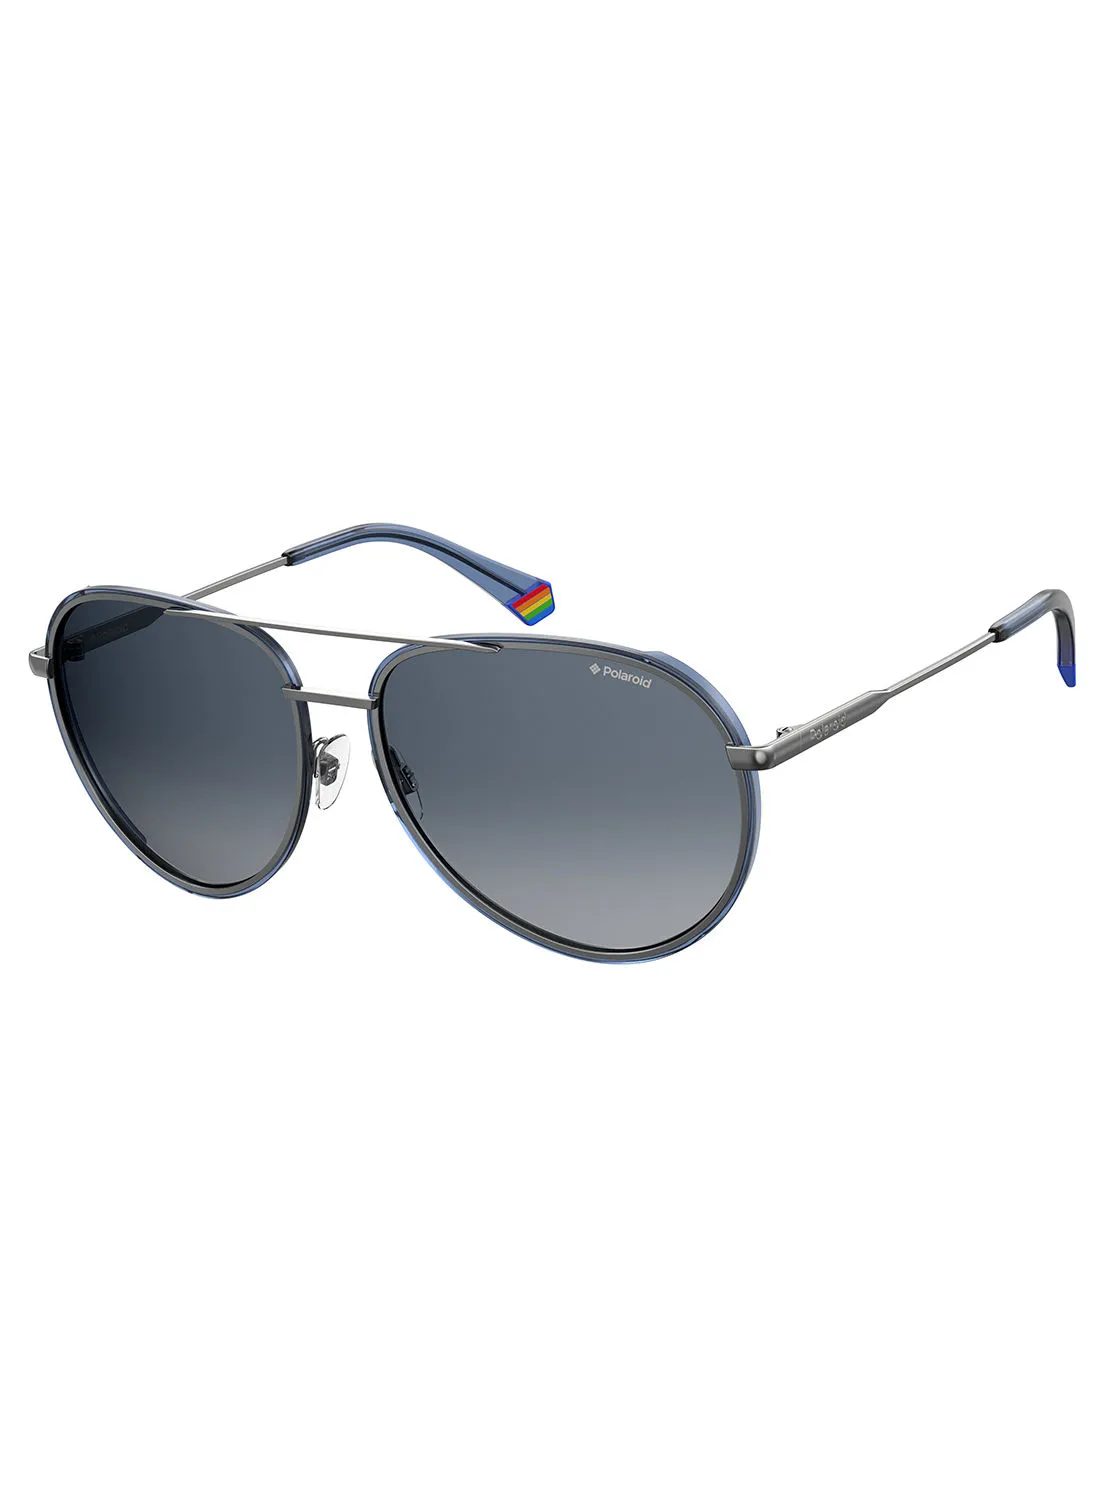 Polaroid Men's Aviator Sunglasses 202920